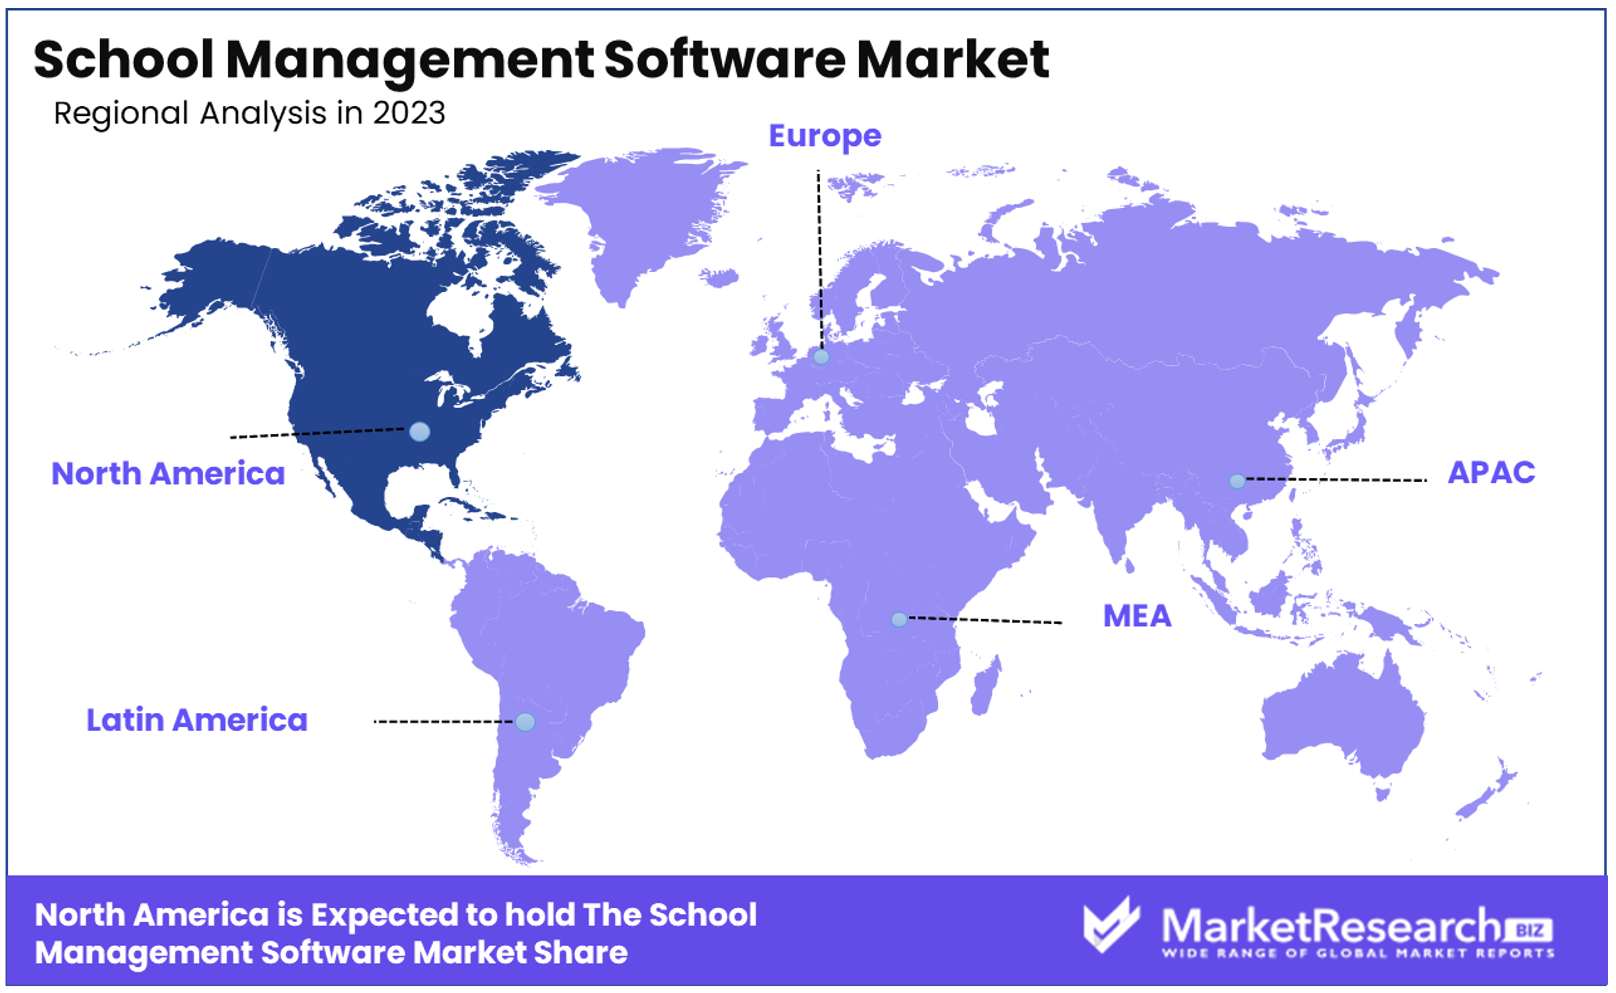 School Management Software Market By Regional Analysis